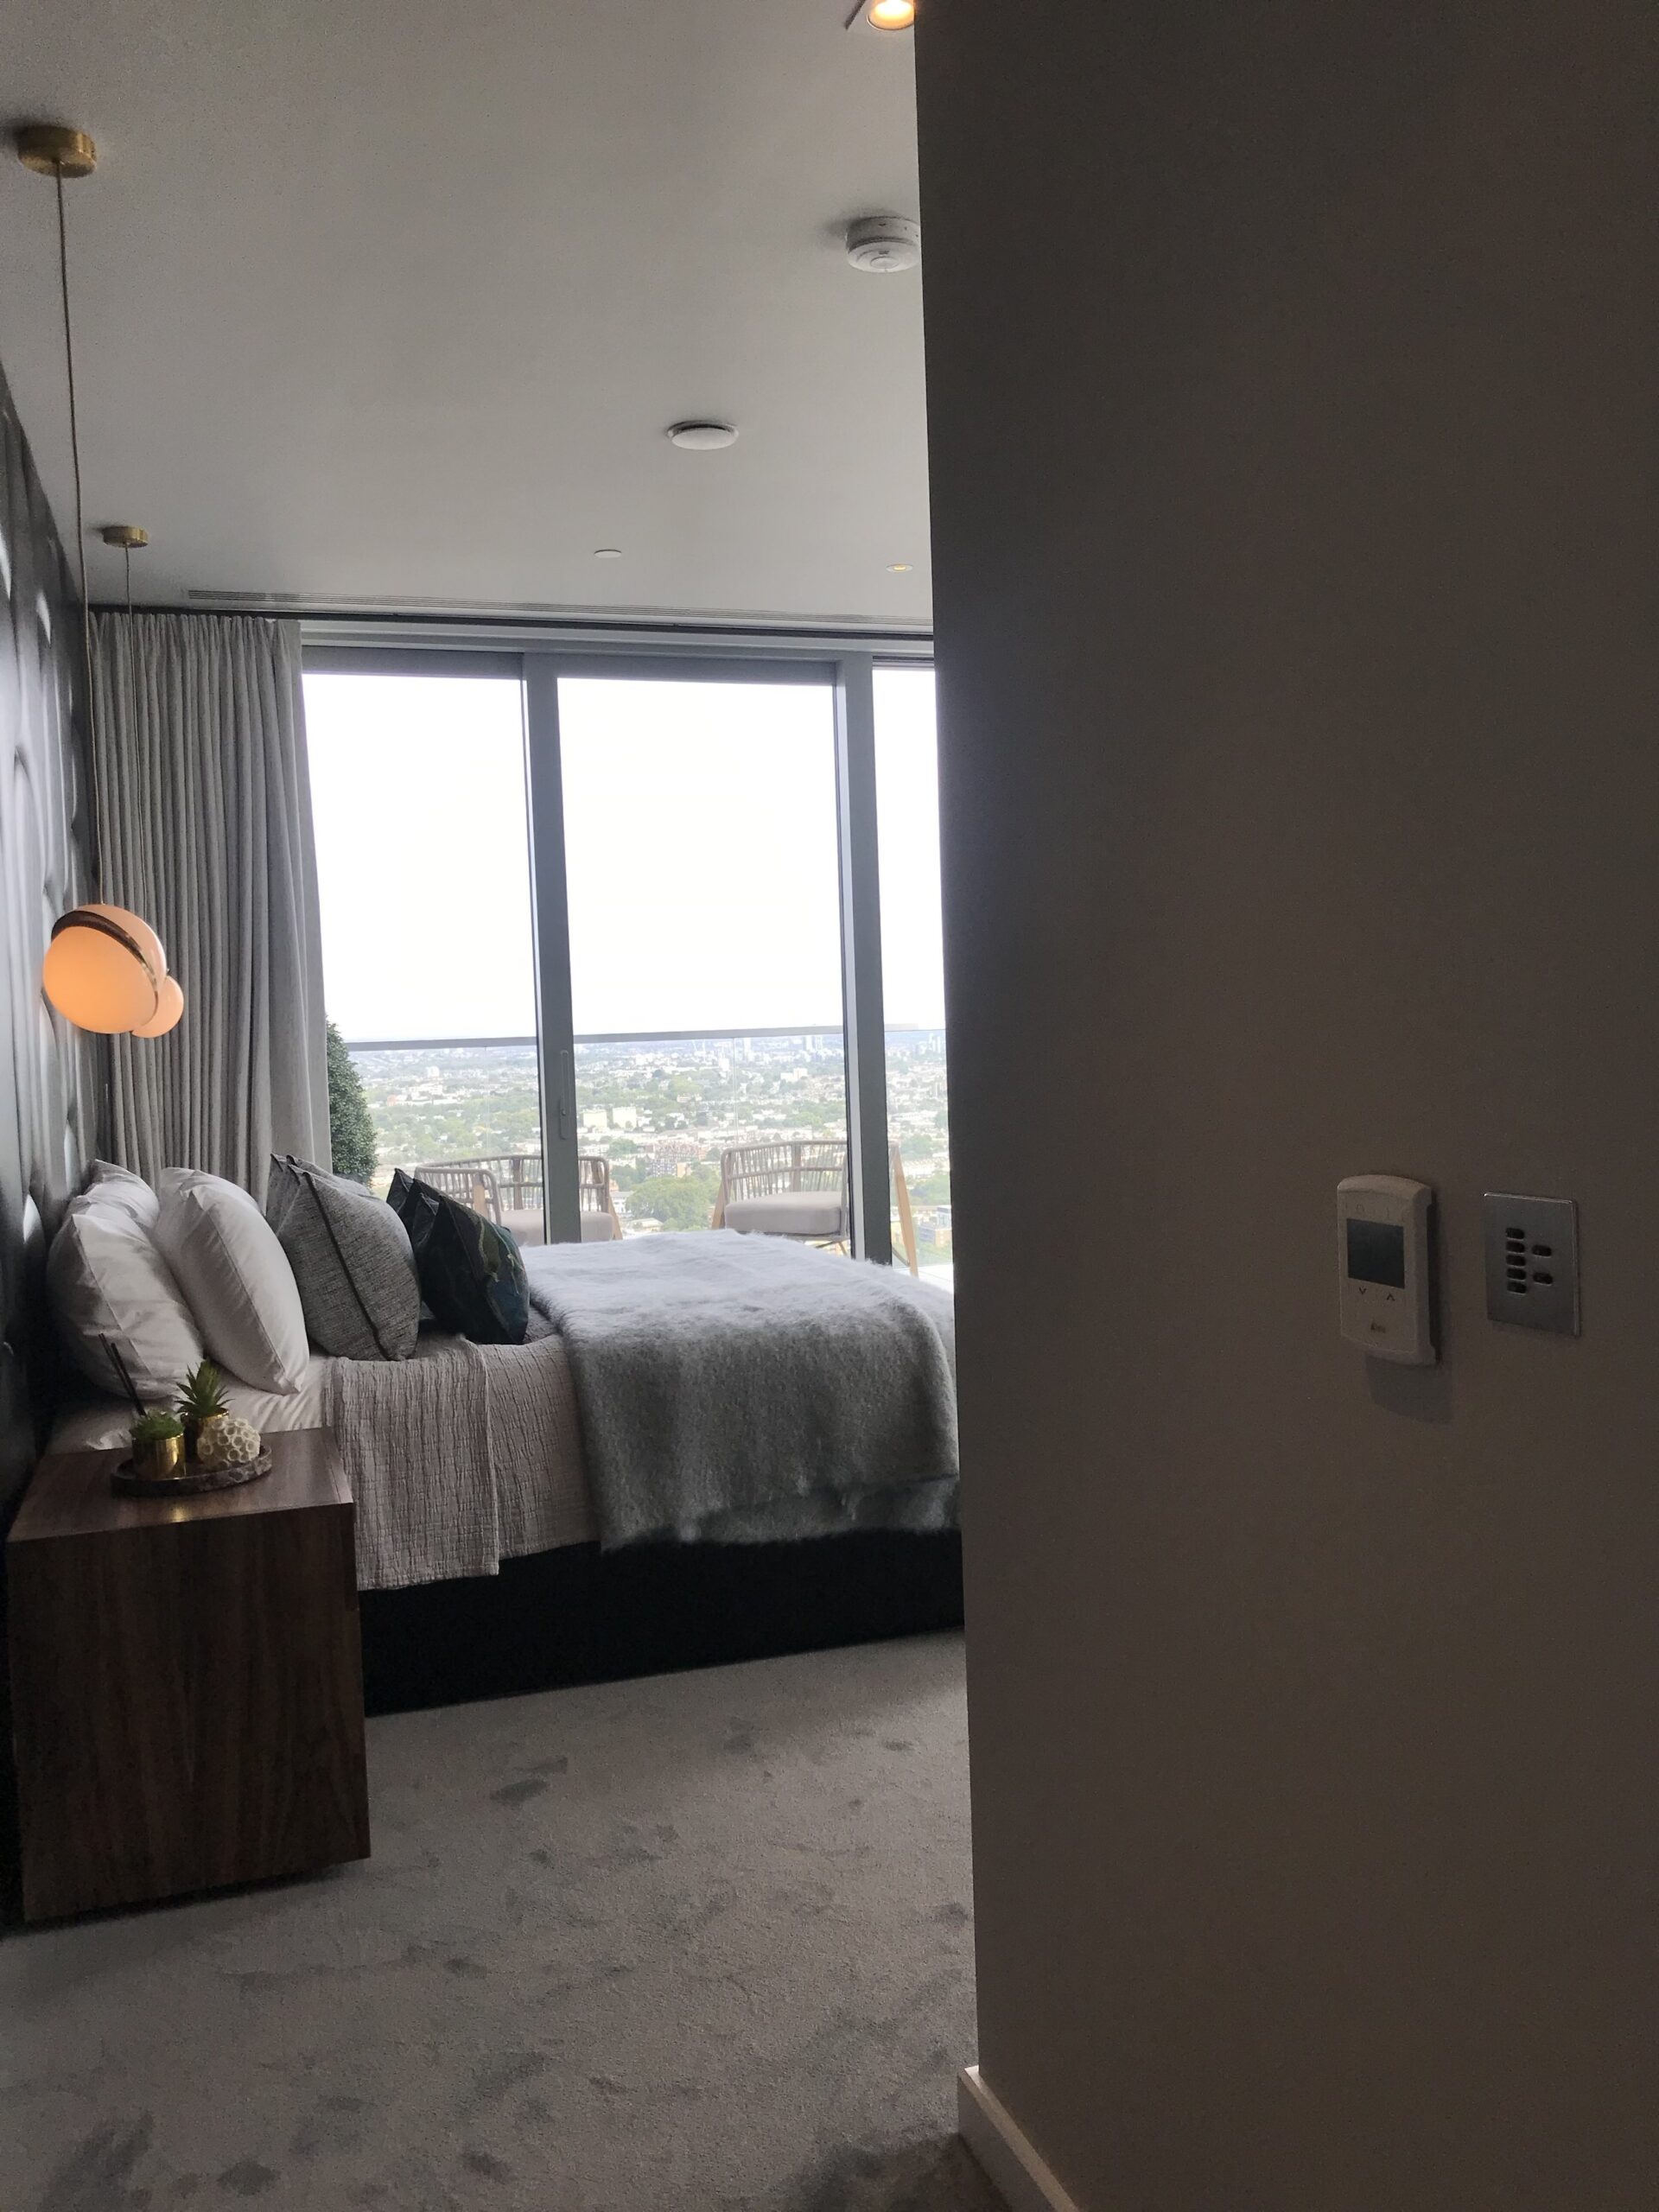 Bedroom with Rako keypad and Heatmiser panel on the wall